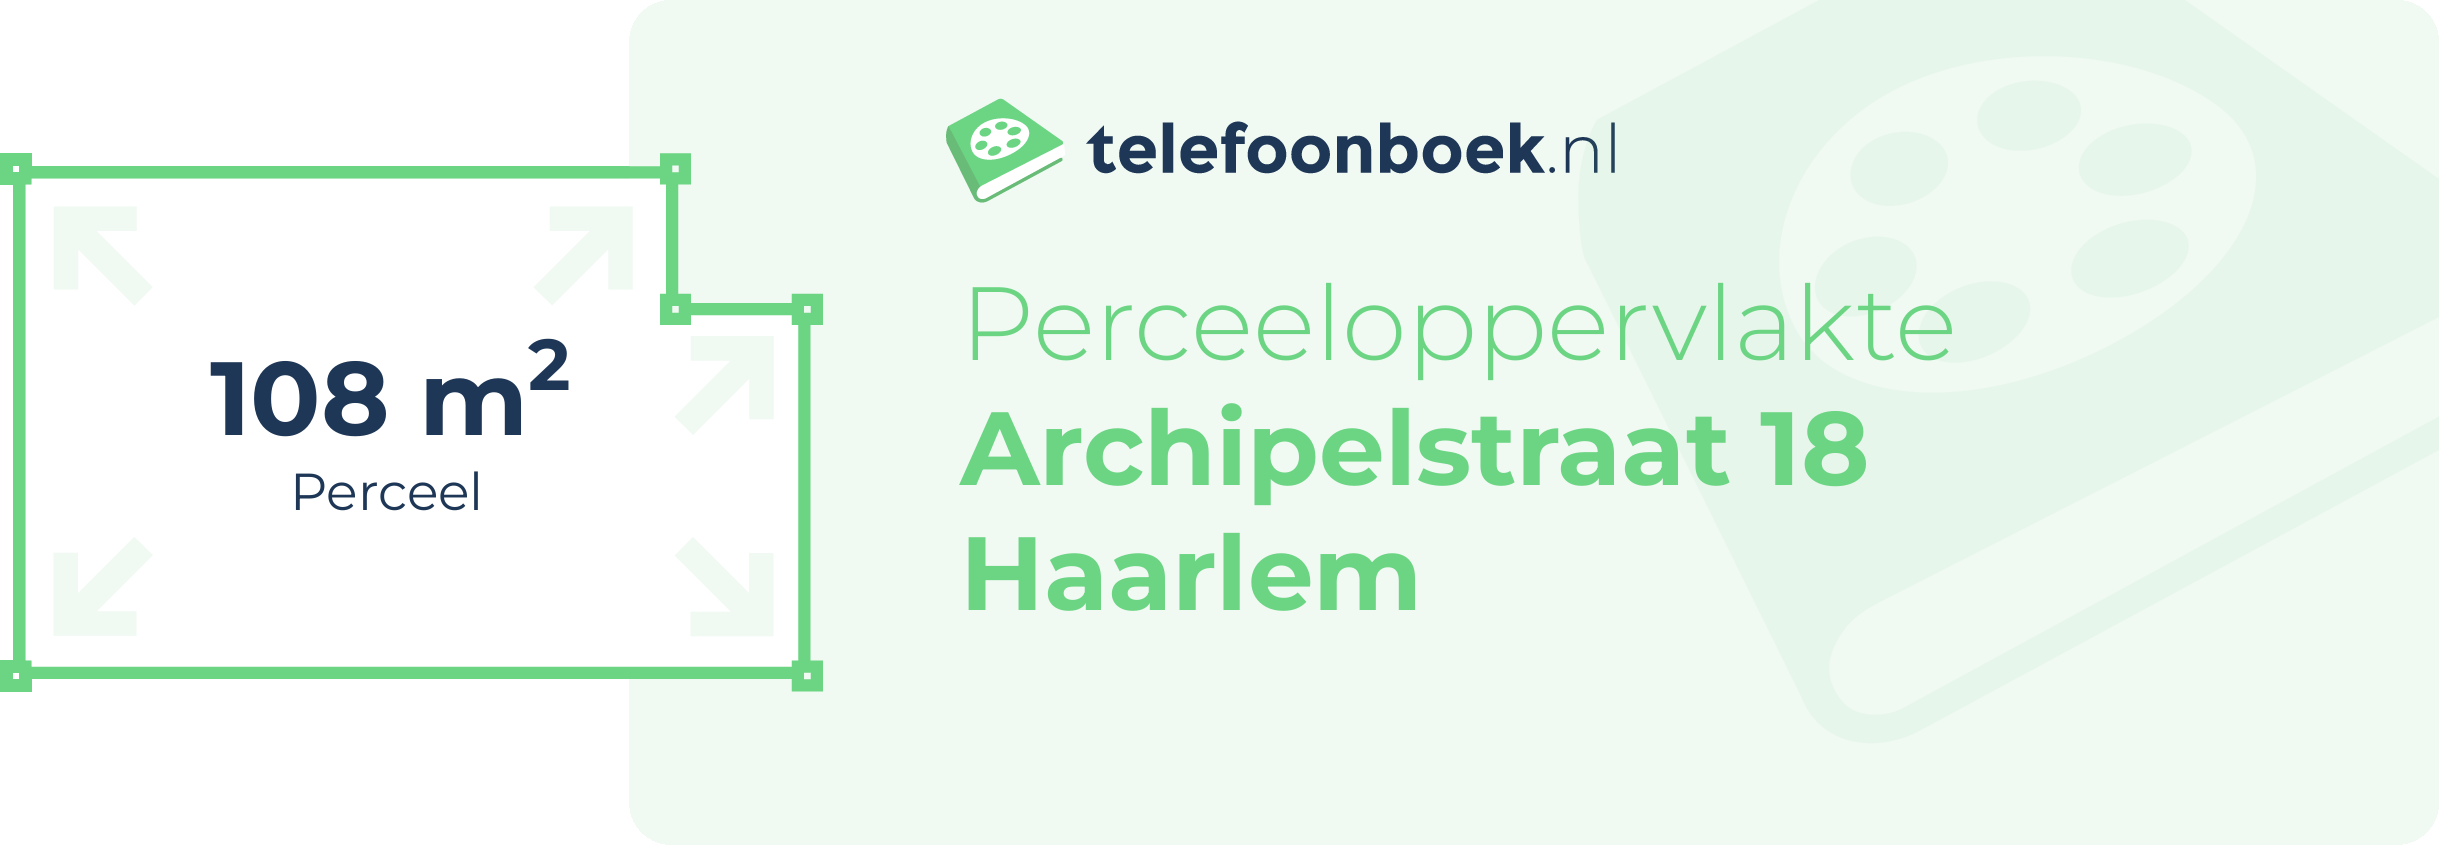 Perceeloppervlakte Archipelstraat 18 Haarlem